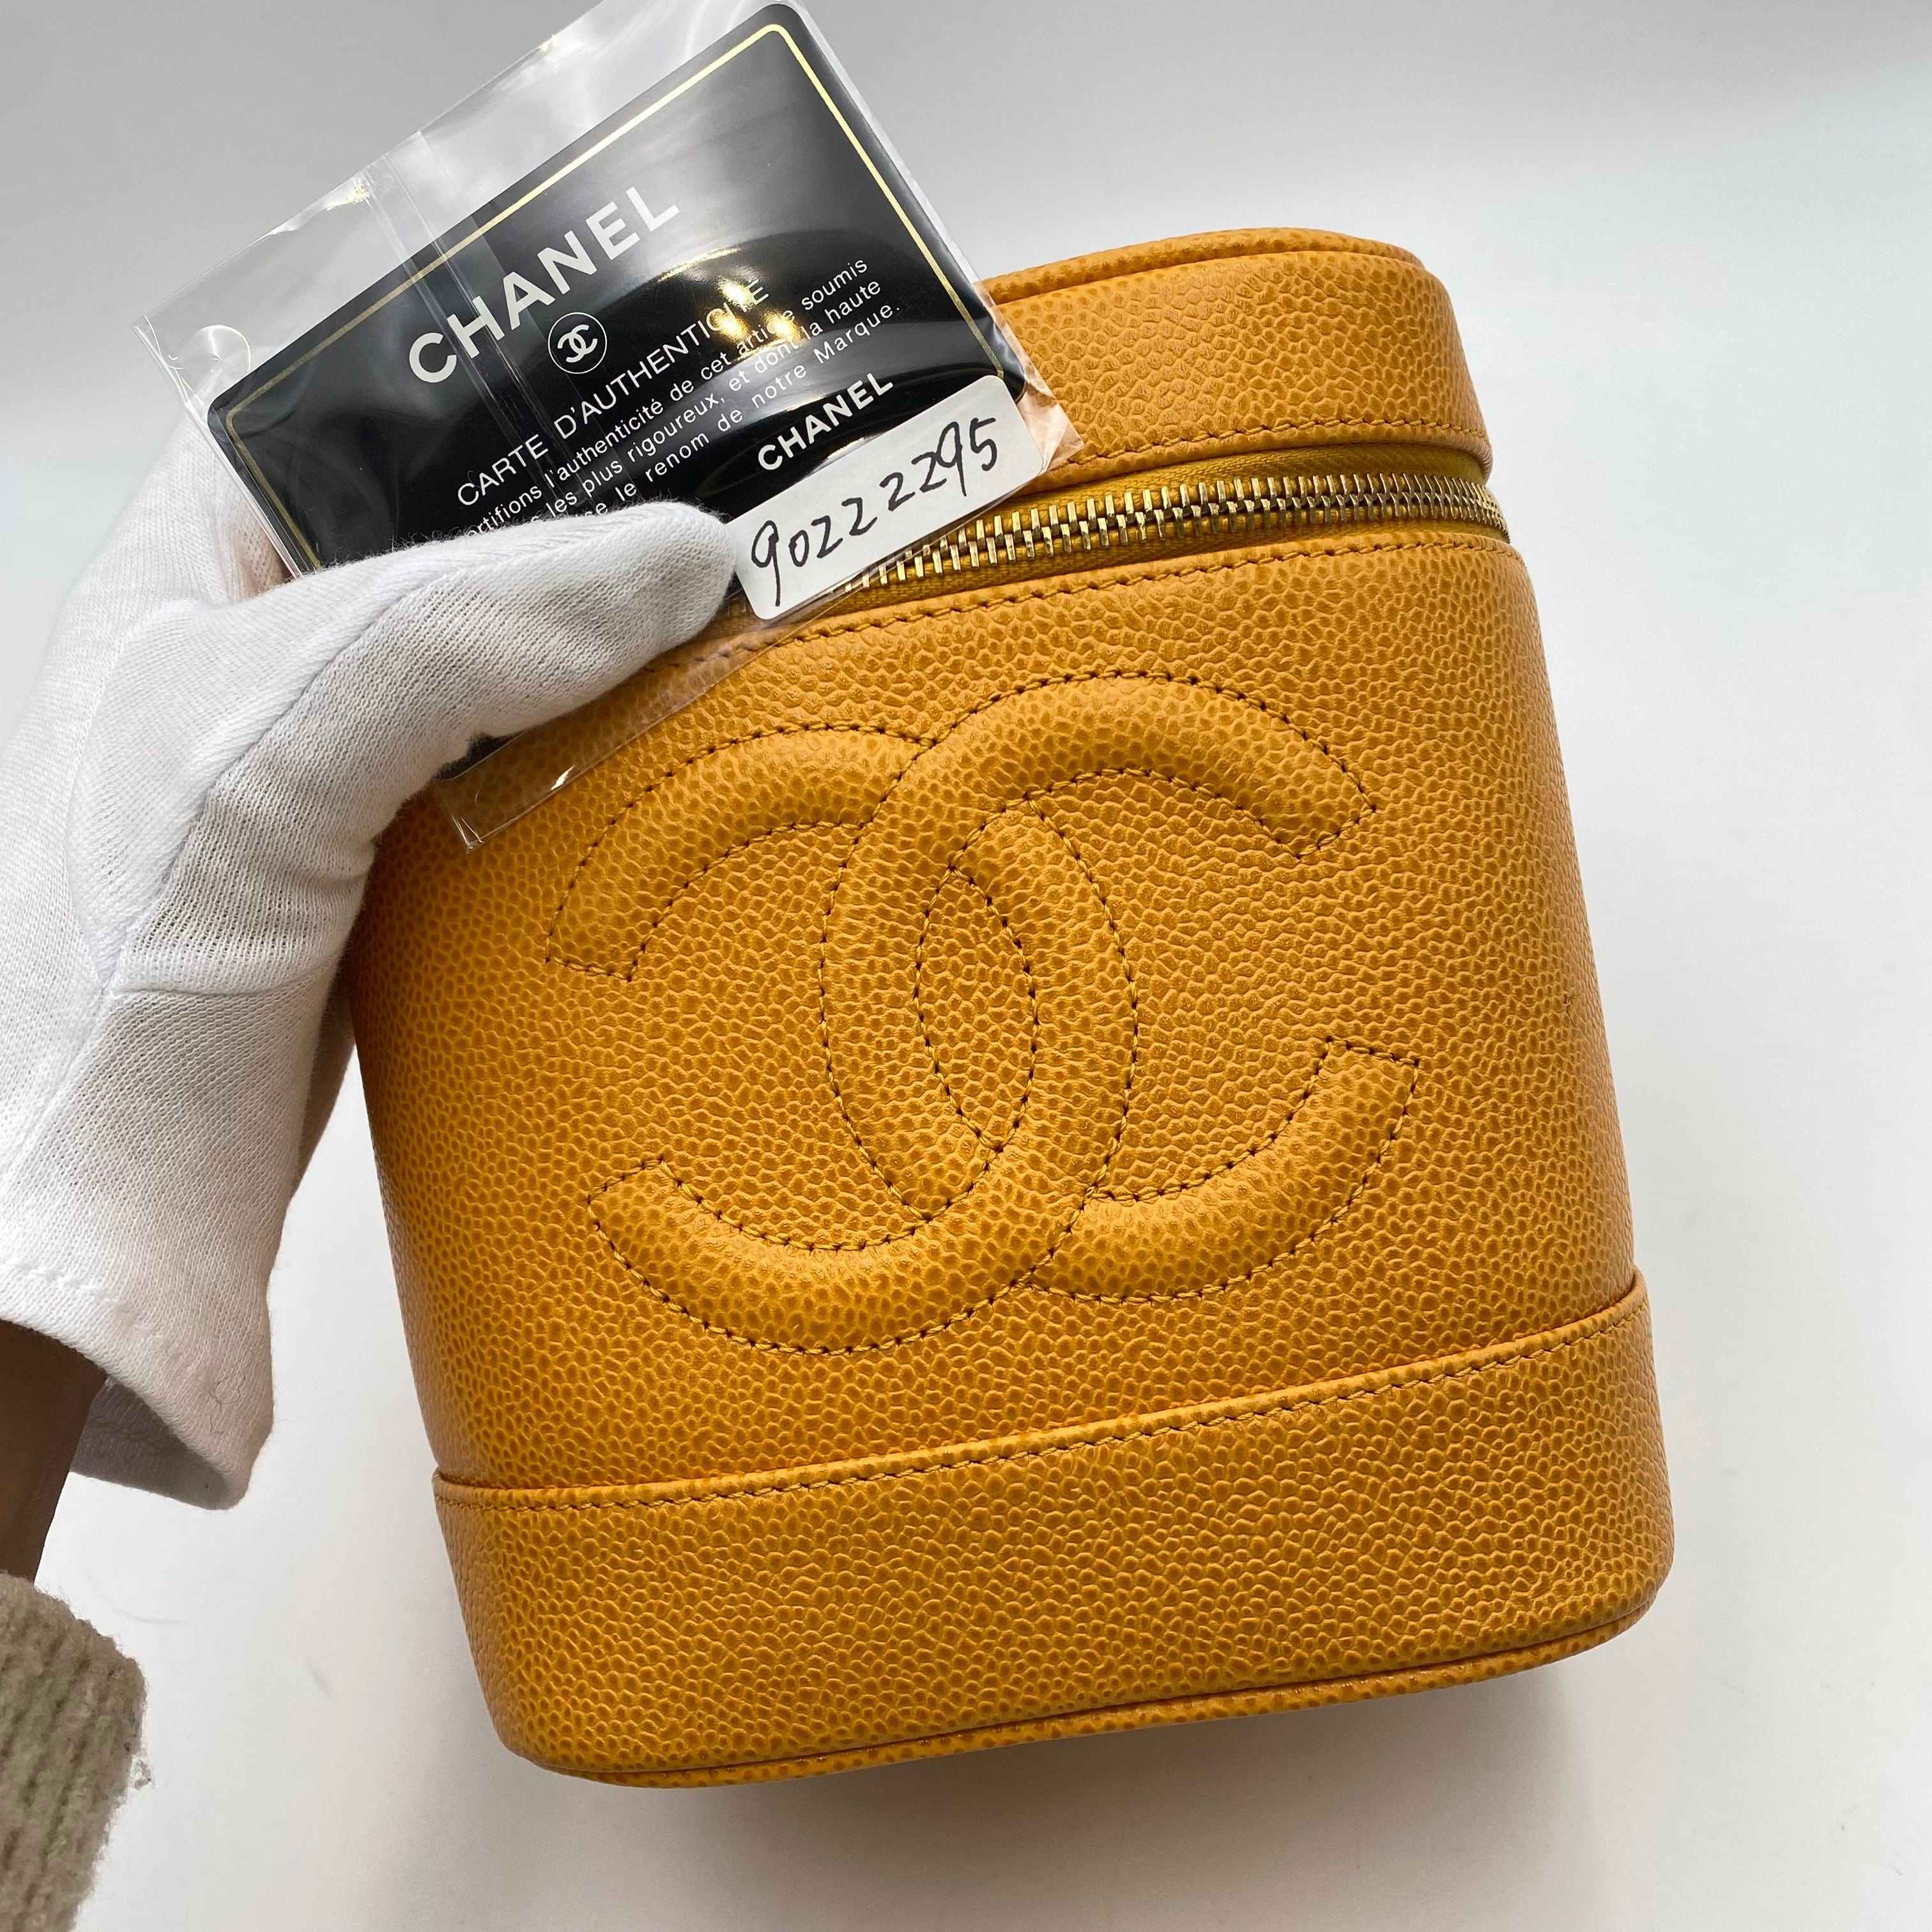 Chanel CHANEL VINTAGE VANITY HAND BAG ORANGE CAVIAR